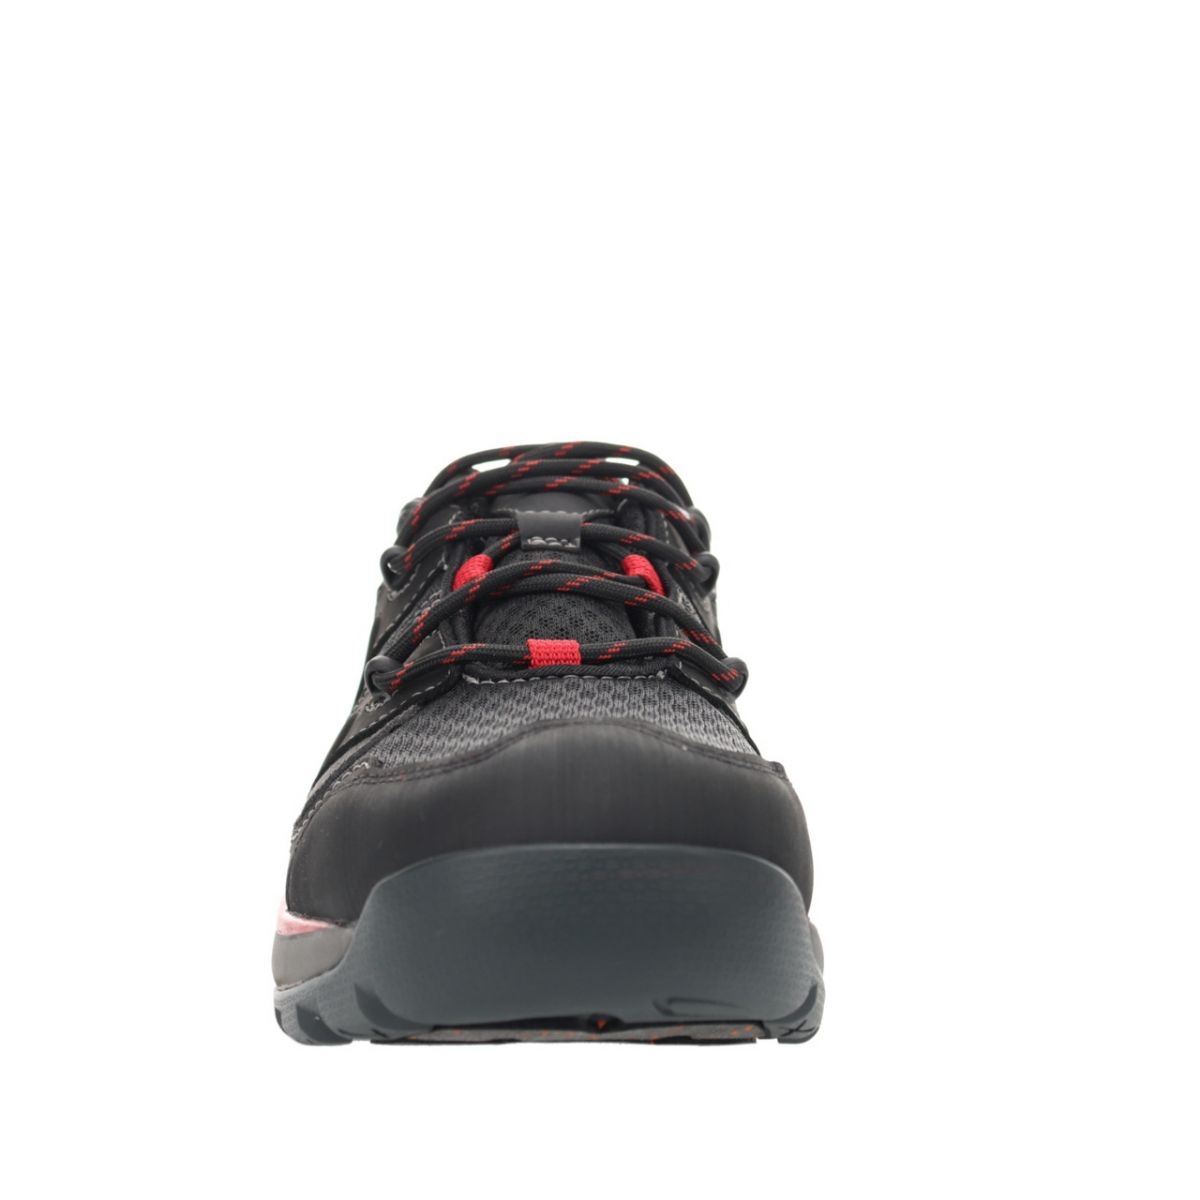 Propet Men's Vercors Hiking Shoe Black/Red - MOA002SBRD BLACK/RED - BLACK/RED, 8.5 X-Wide